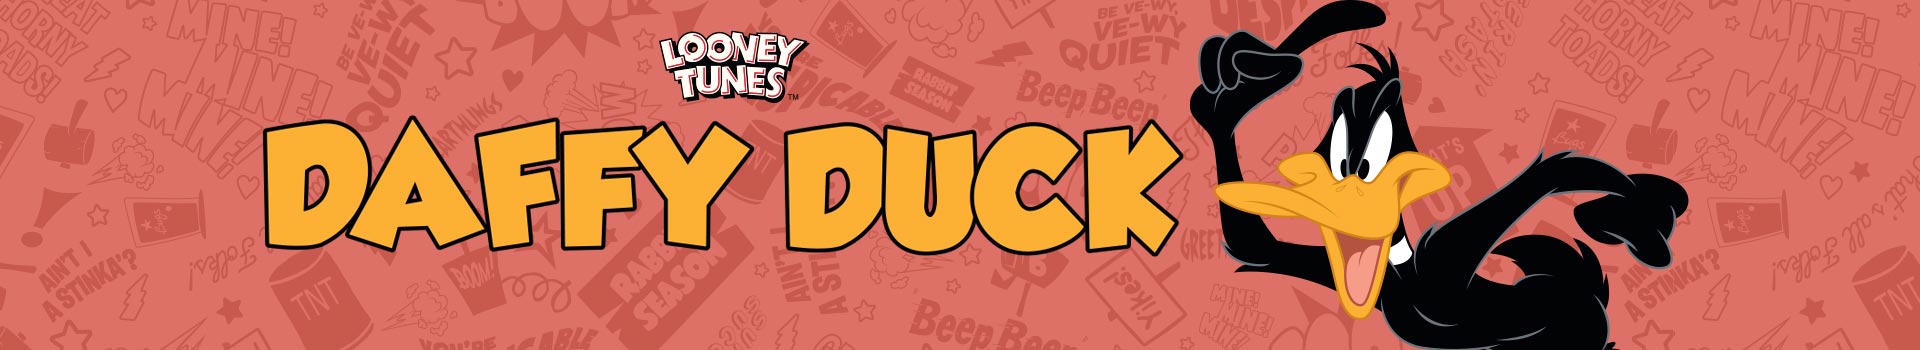 Daffy Duck - Official Merchandise